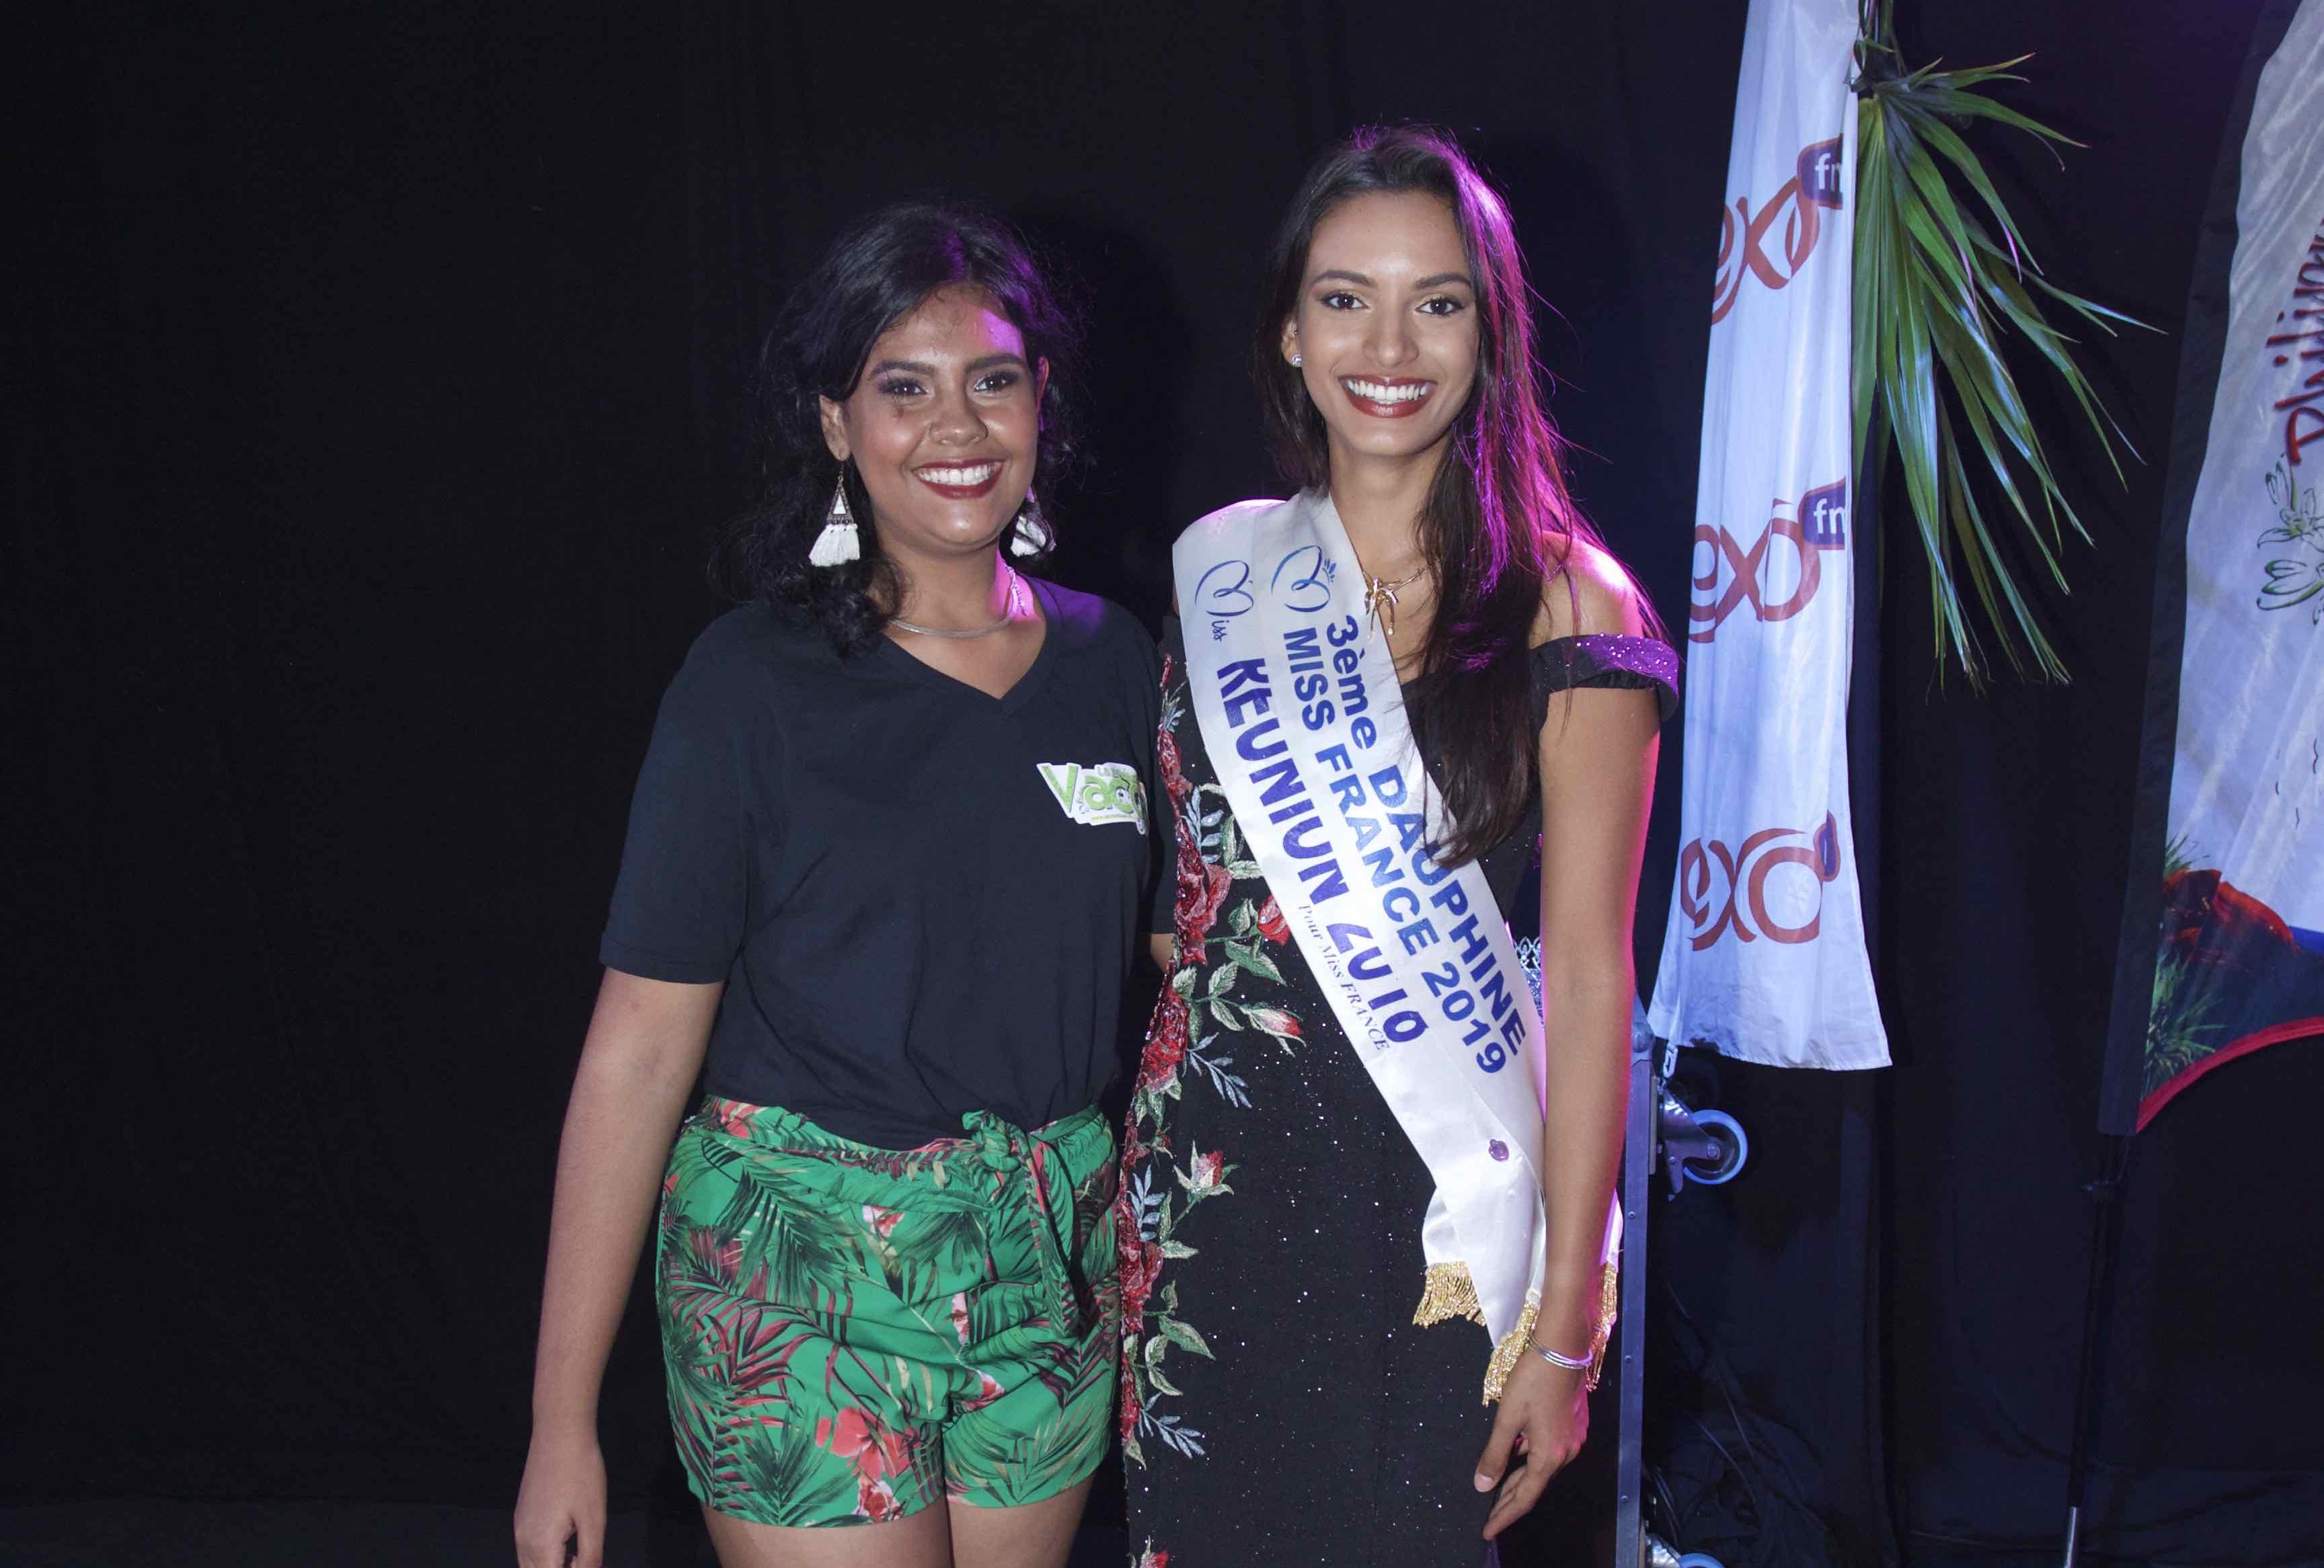 Frideline Mouniama élue Miss Vacoa 2019